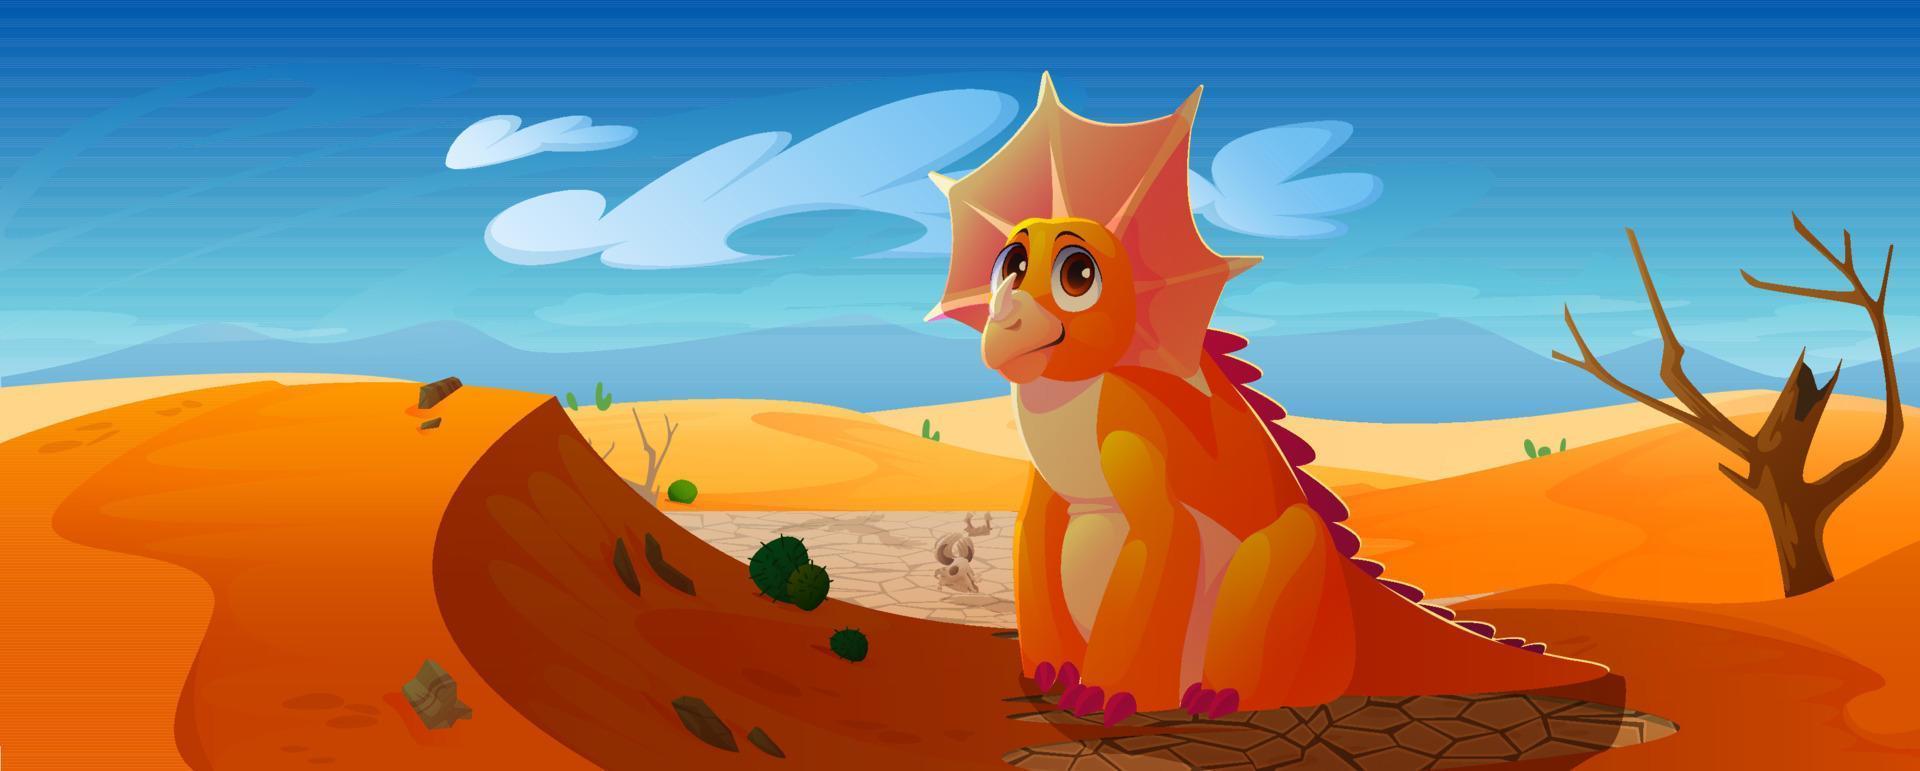 Cute baby dinosaur, triceratops in desert vector